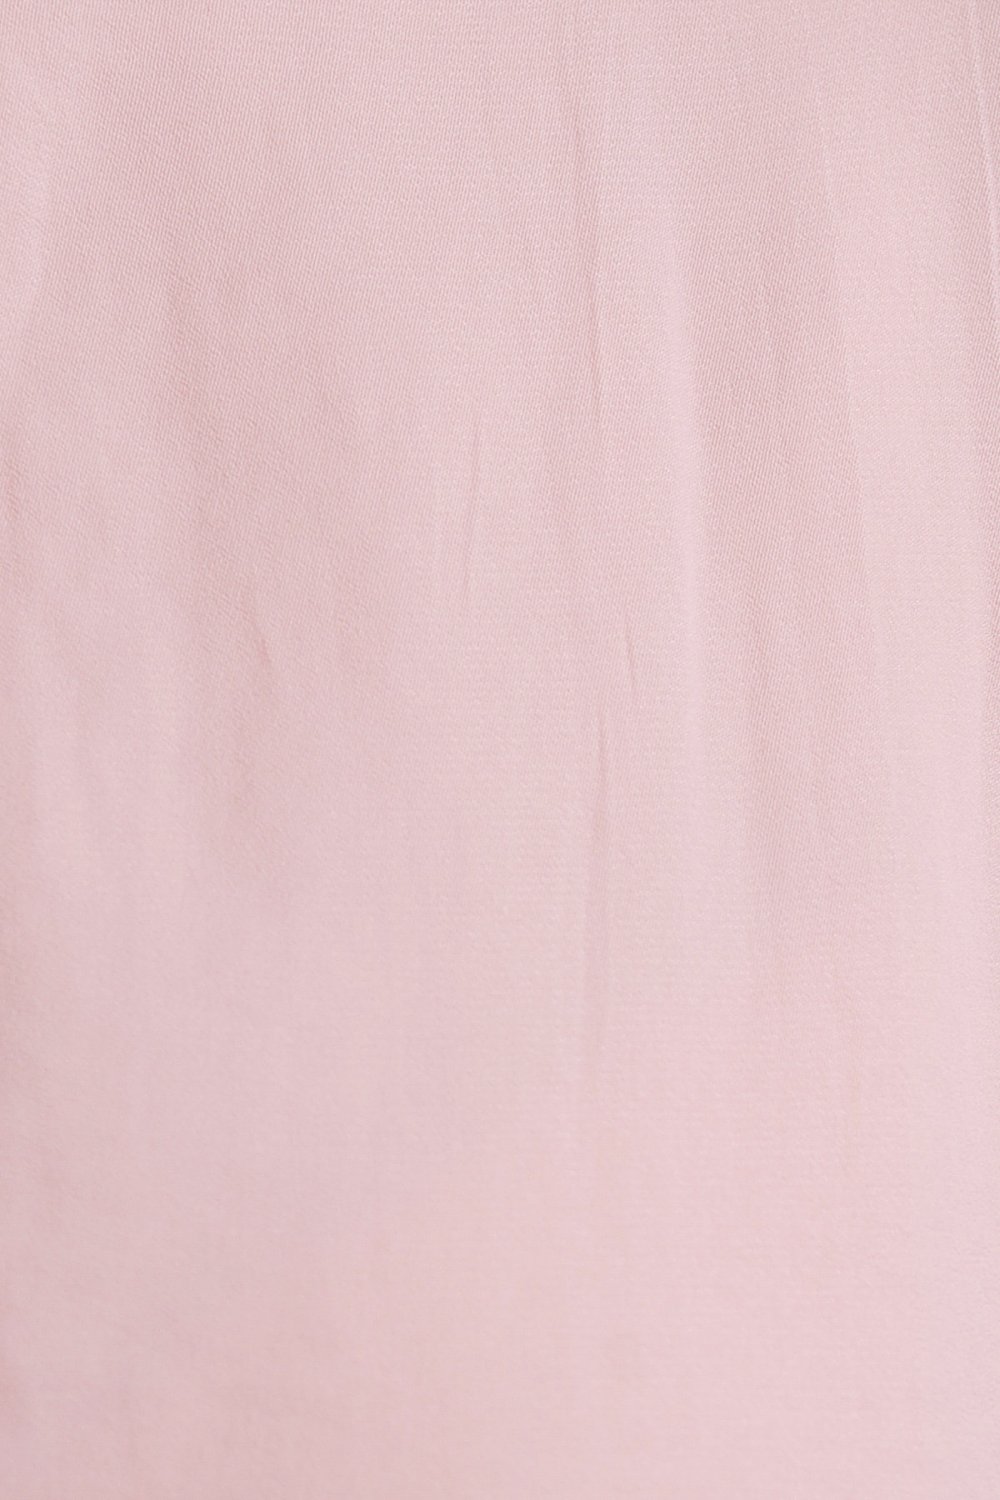 Плитка настенная ВКЗ, Агата верх розовая светлая, 250*350